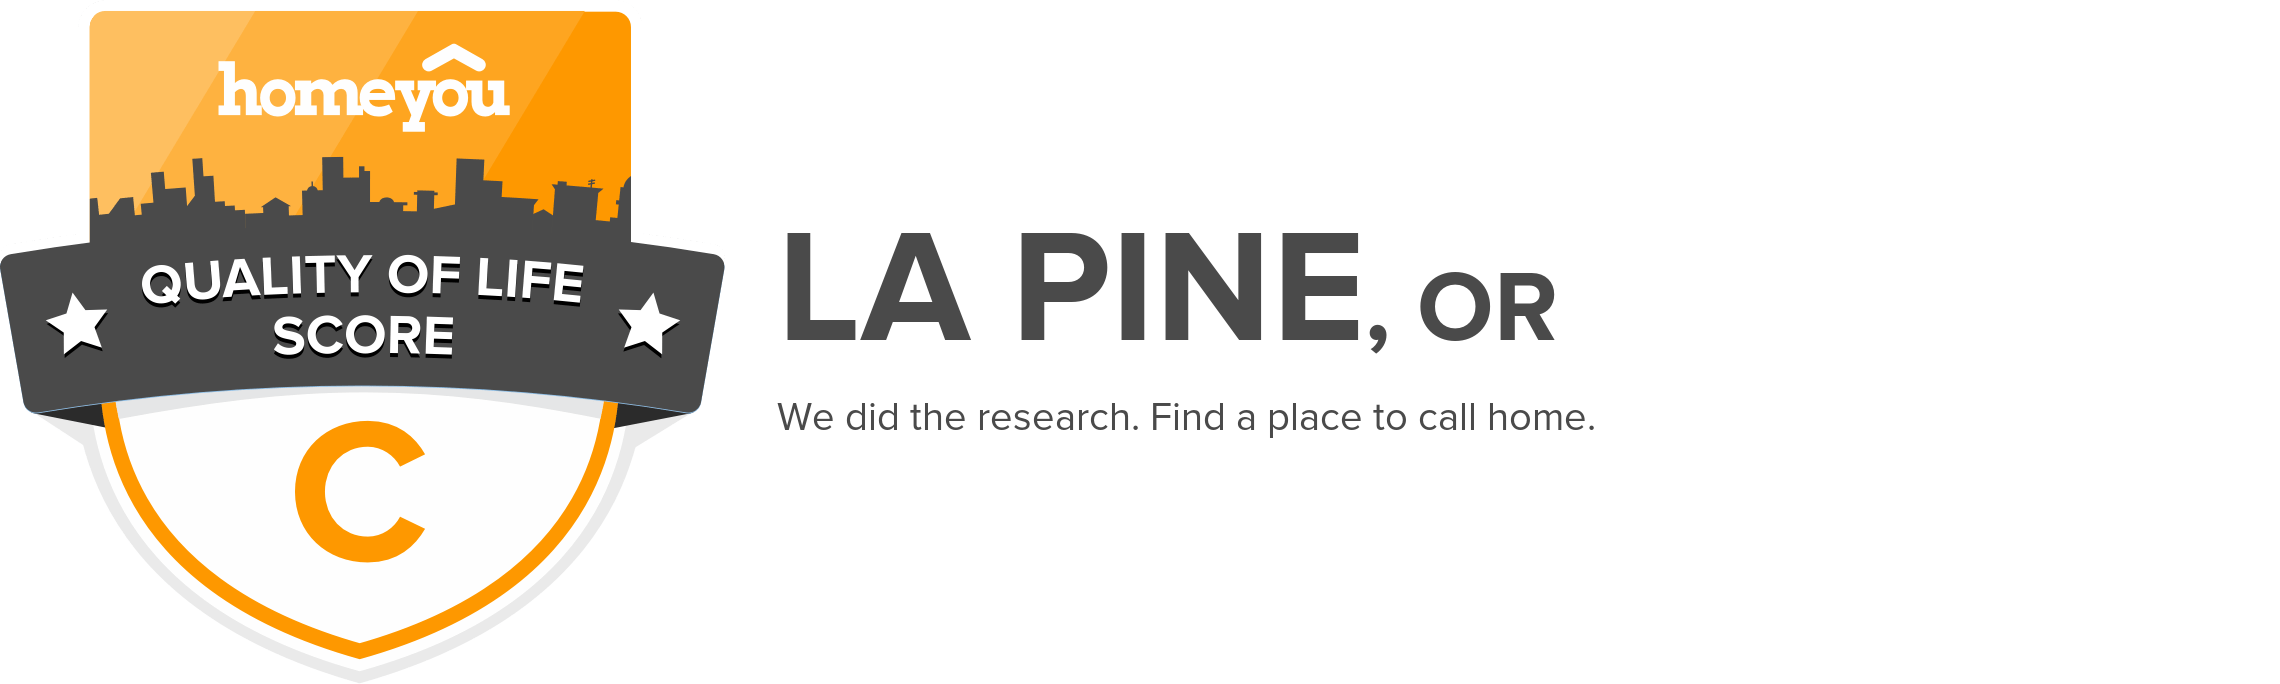 La Pine, OR